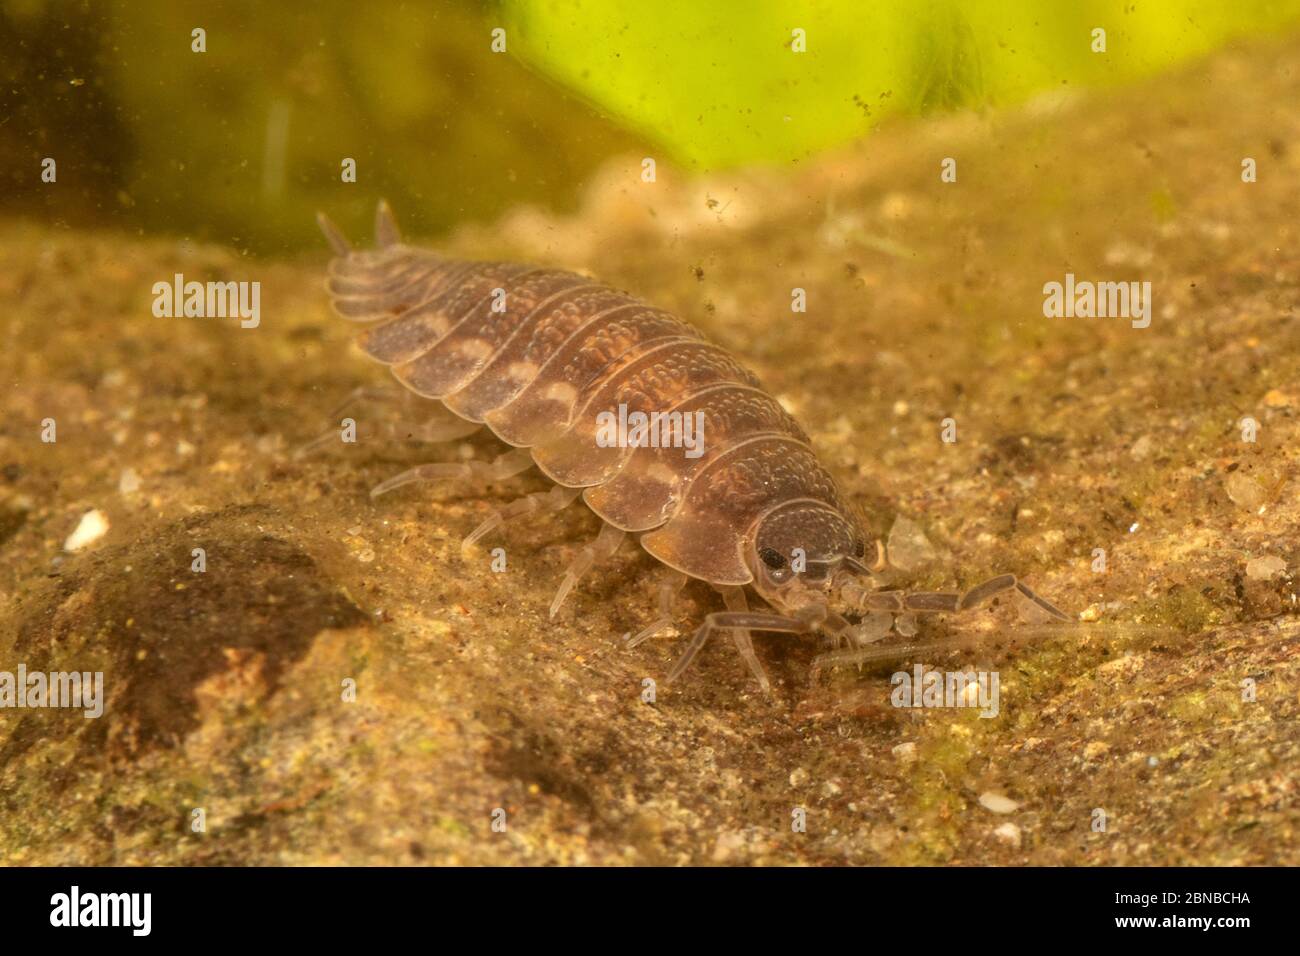 Freshwater woodlouse, Waterlouse, Aquatic sowbug, Water hoglouse (Asellus aquaticus), feeding on deadwood, Germany Stock Photo